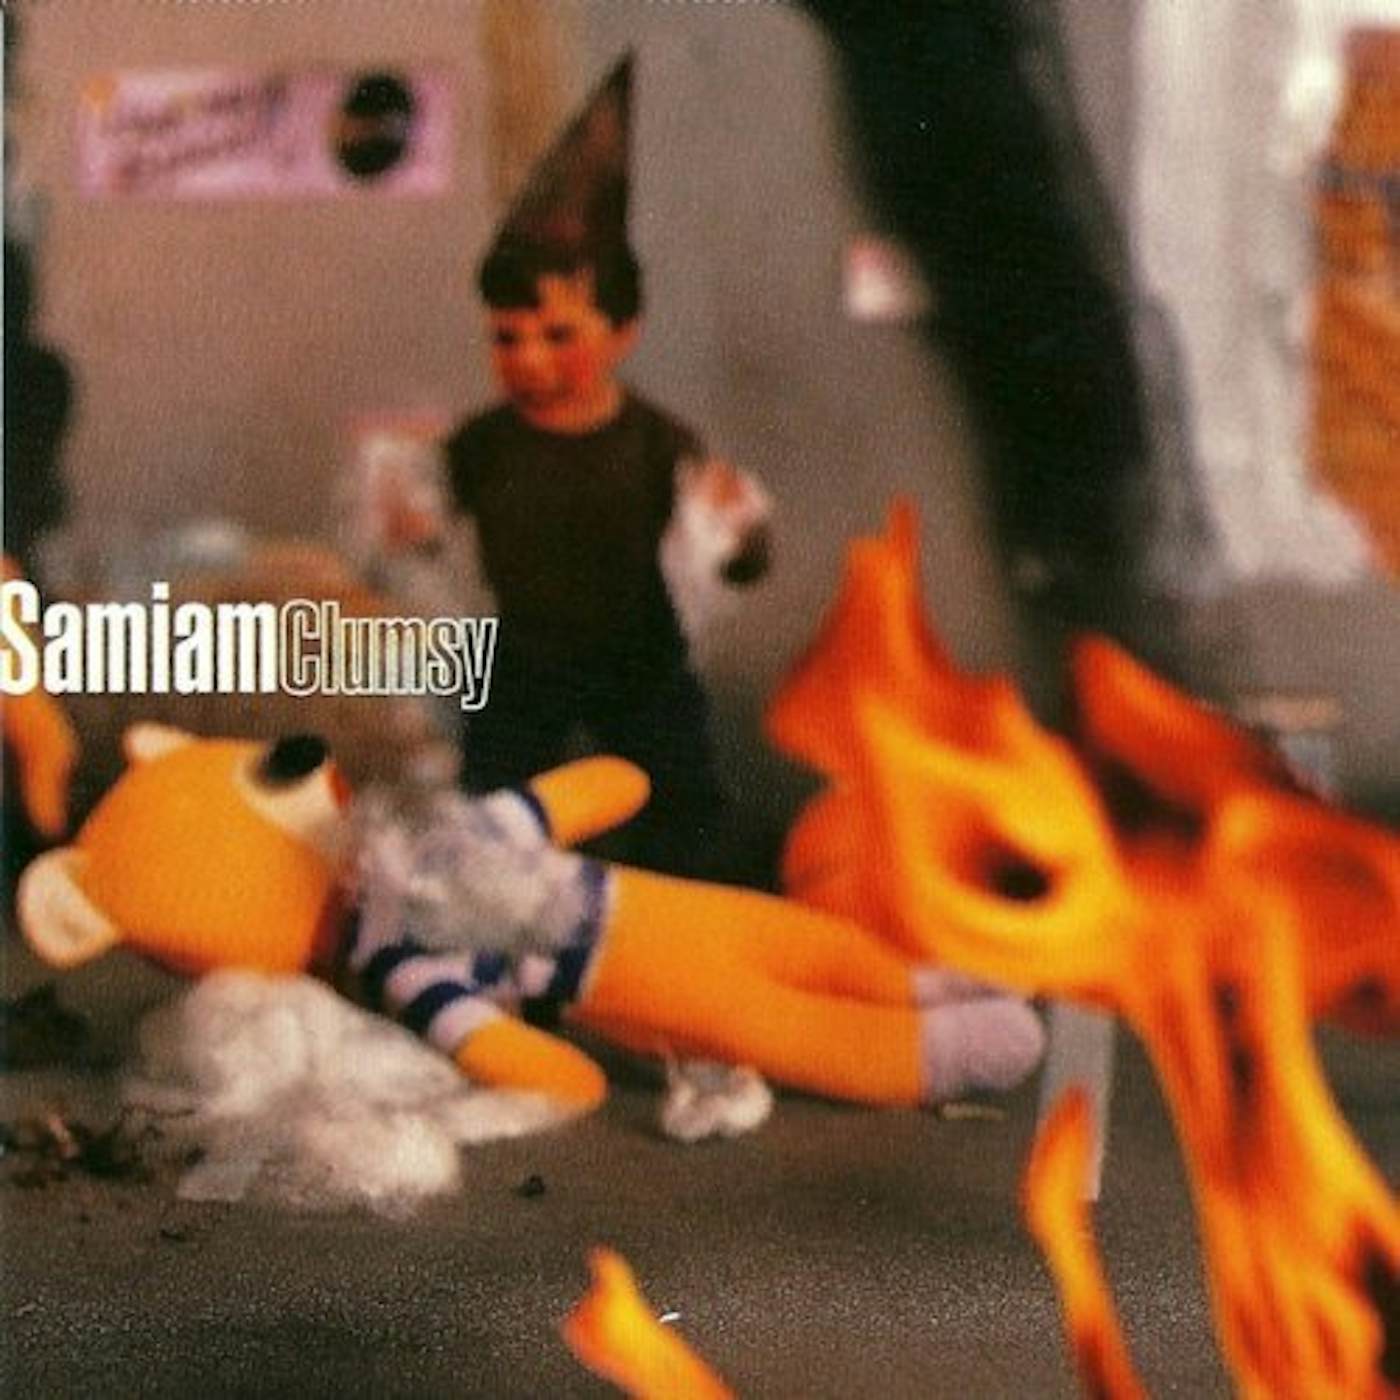 Samiam Clumsy Vinyl Record